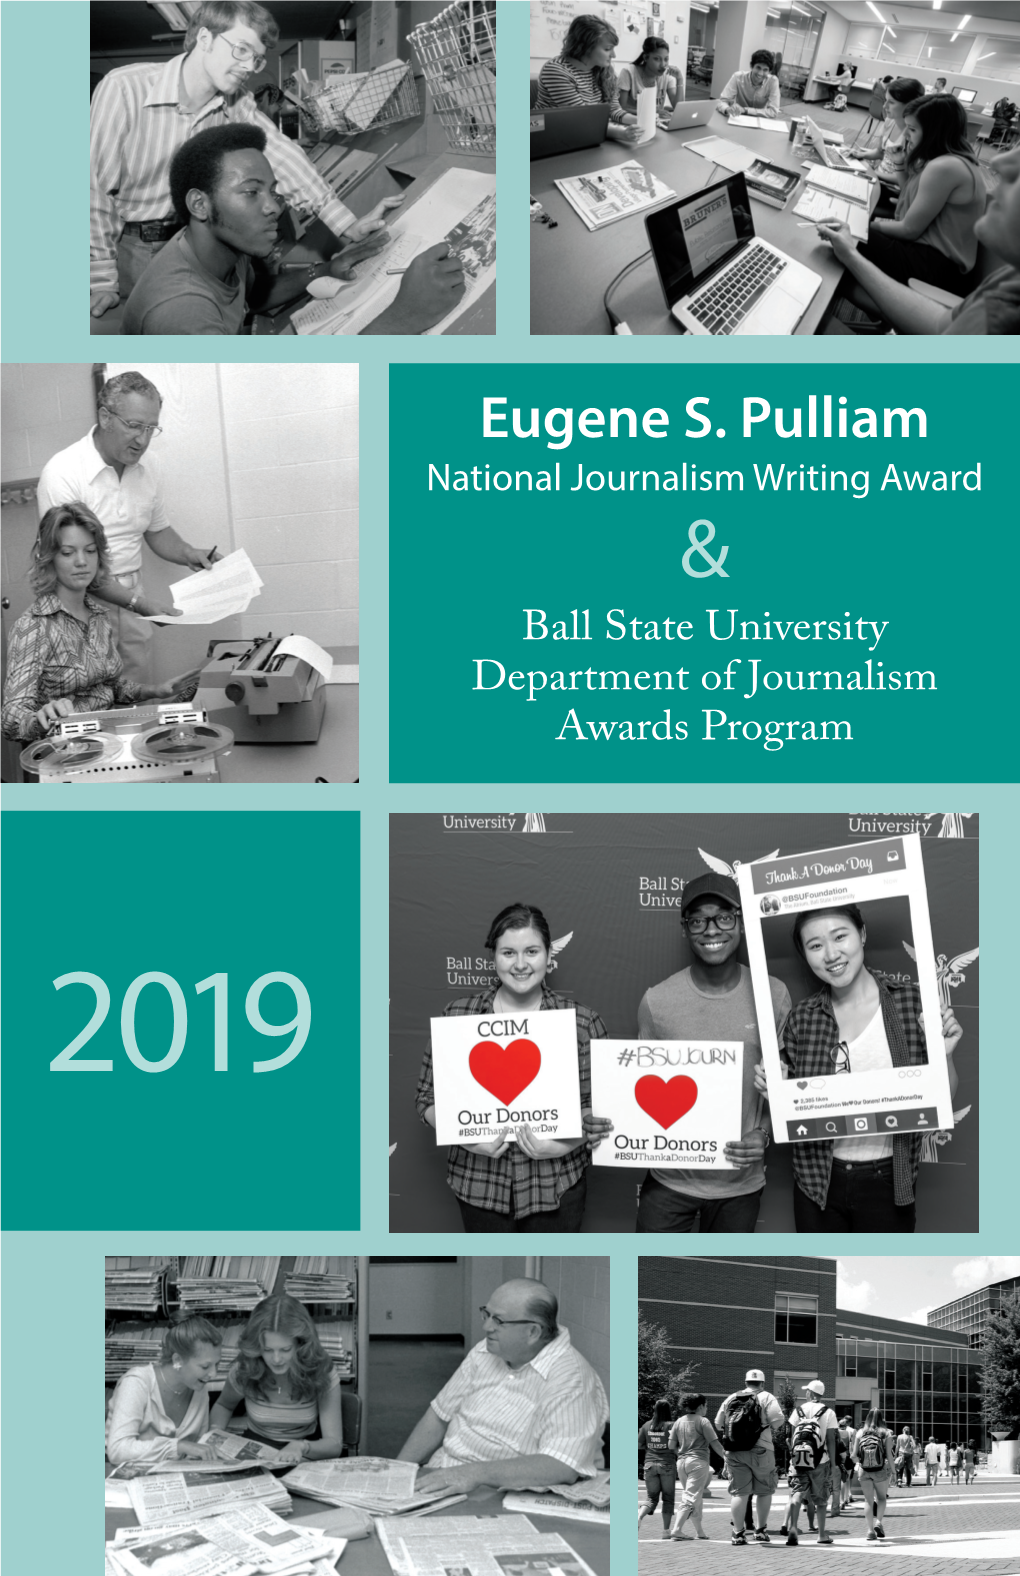 Eugene S. Pulliam National Journalism Writing Award & Ball State University Department of Journalism Awards Program